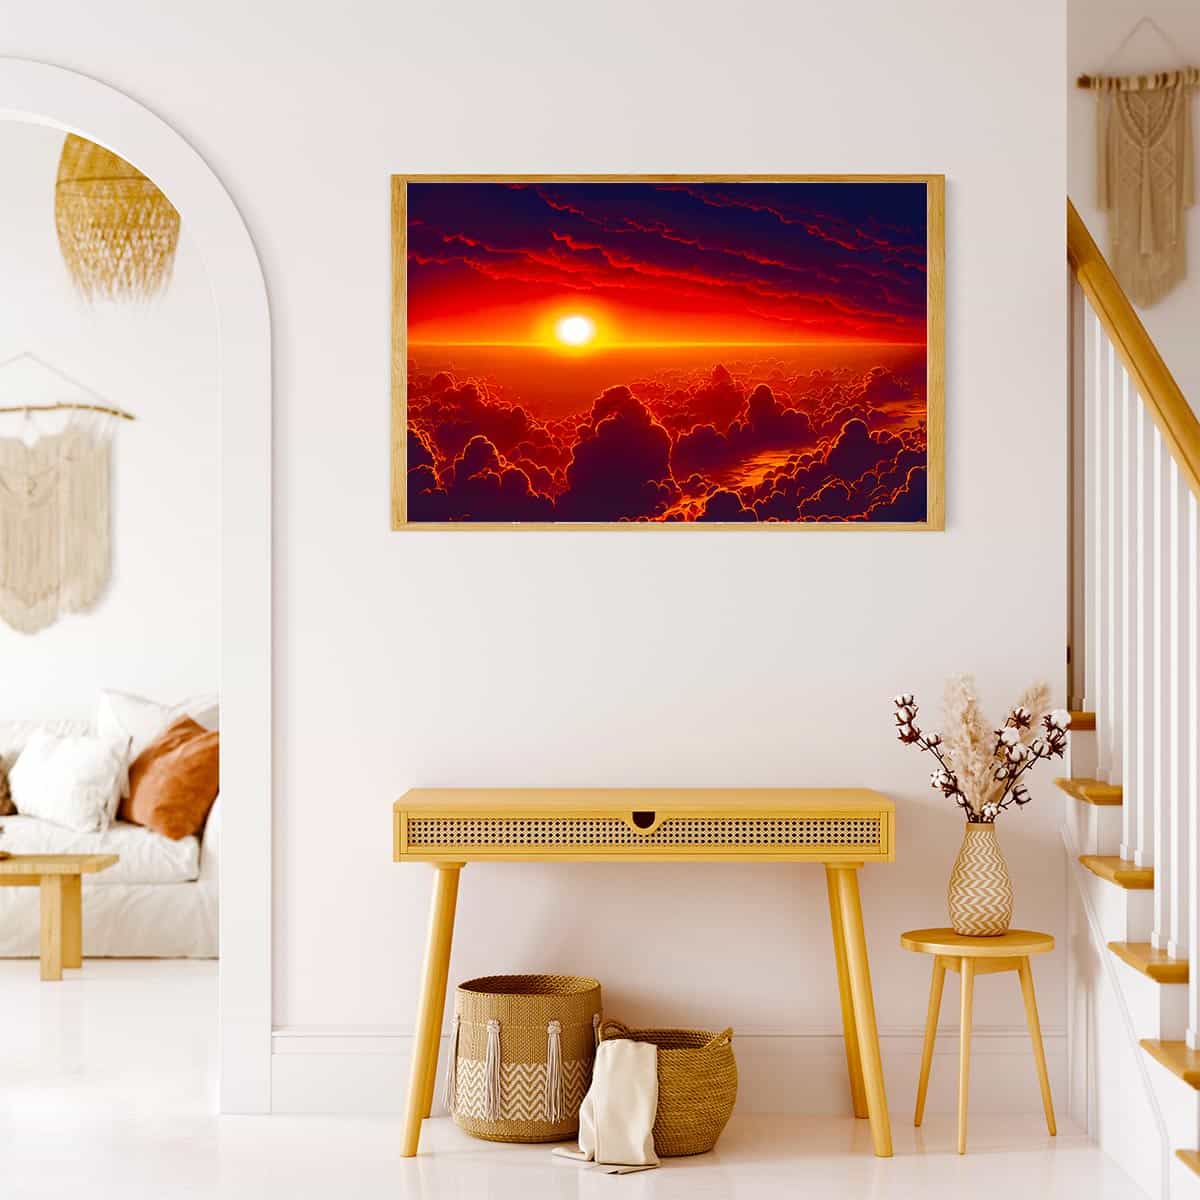 Diamond Painting - Sonnenaufgang in den Wolken - gedruckt in Ultra-HD - Abstrakt, Horizontal, Landschaft, Sonnenaufgang